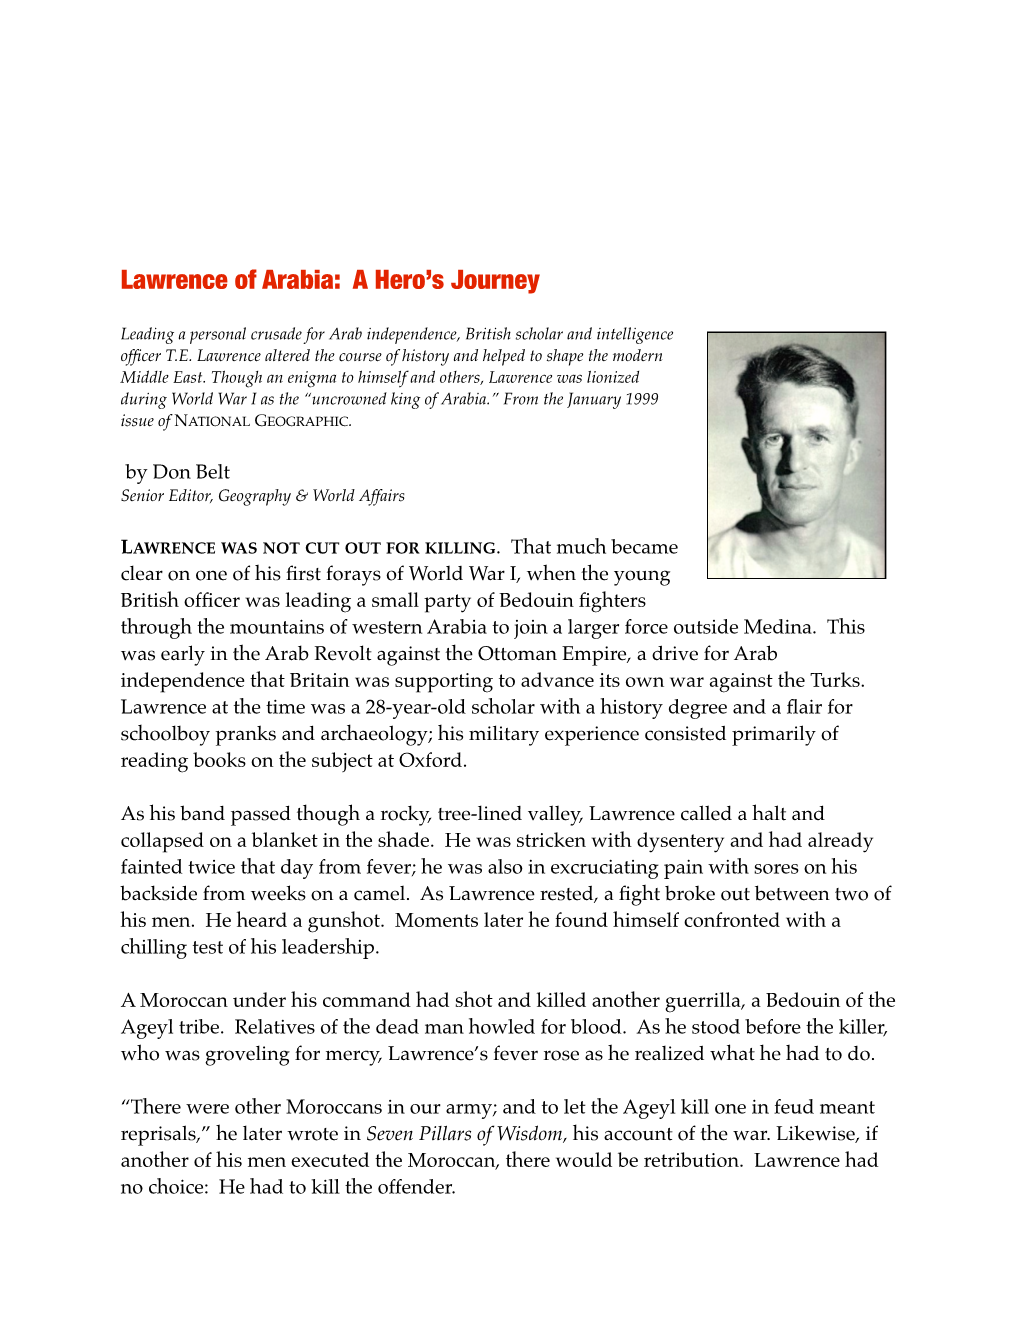 Lawrence of Arabia: a Hero's Journey